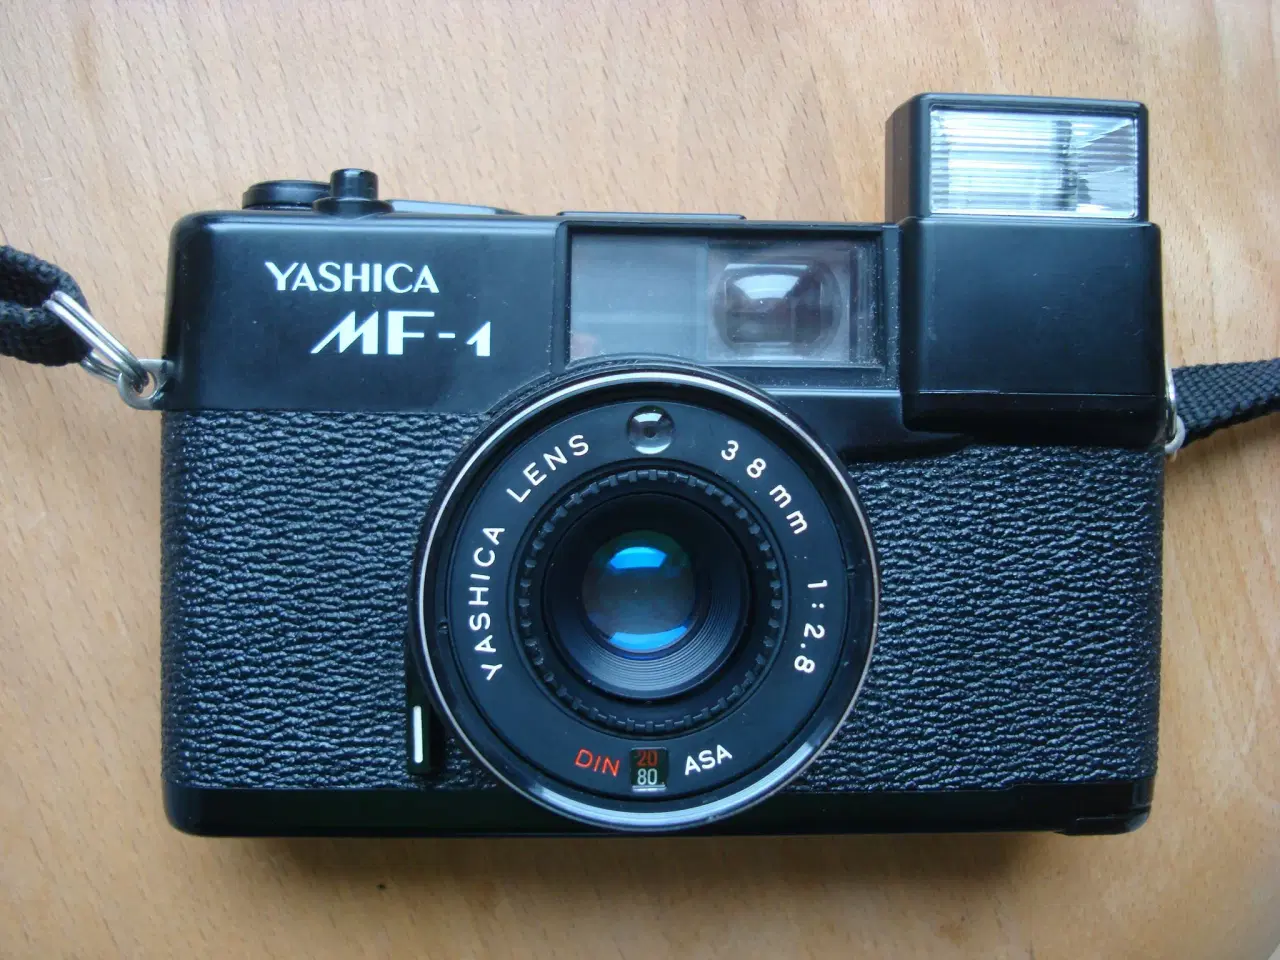 Billede 2 - Yashica MF-1 point and shoot kamera